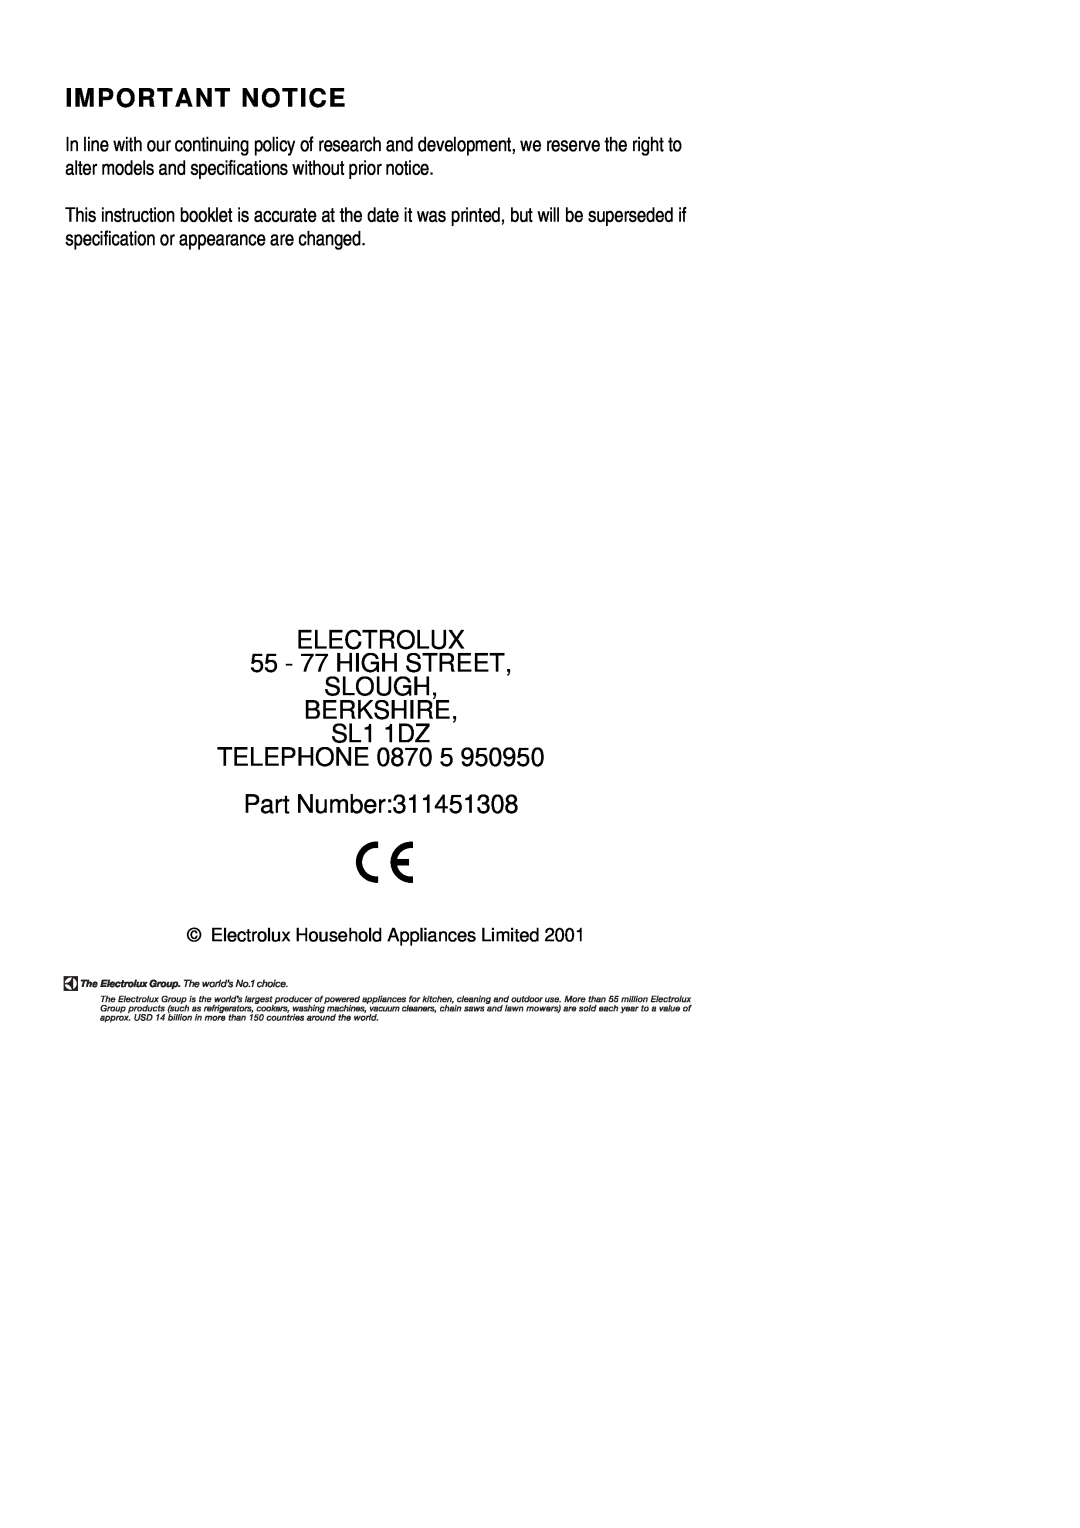 Electrolux EOG 600 manual Important Notice, ELECTROLUX 55 - 77 HIGH STREET SLOUGH BERKSHIRE SL1 1DZ 